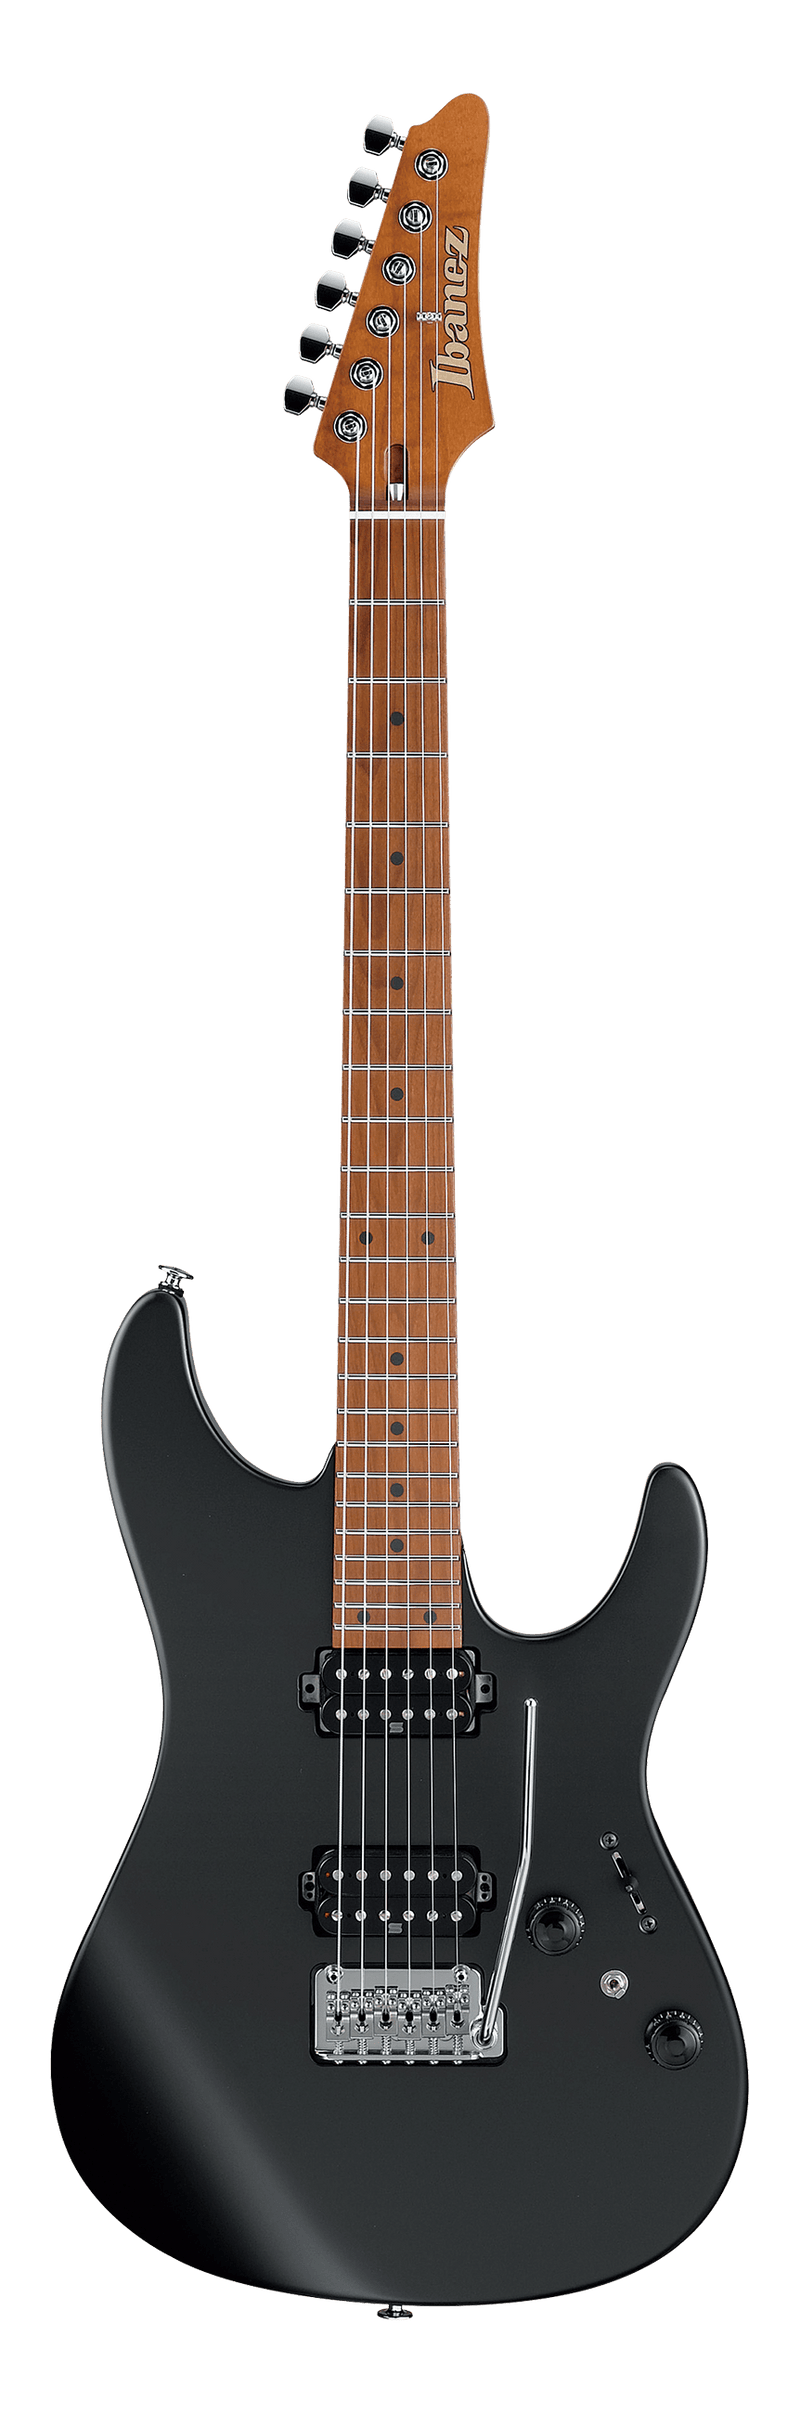 Ibanez AZ PRESTIGE Electric Guitar (Black Flat)